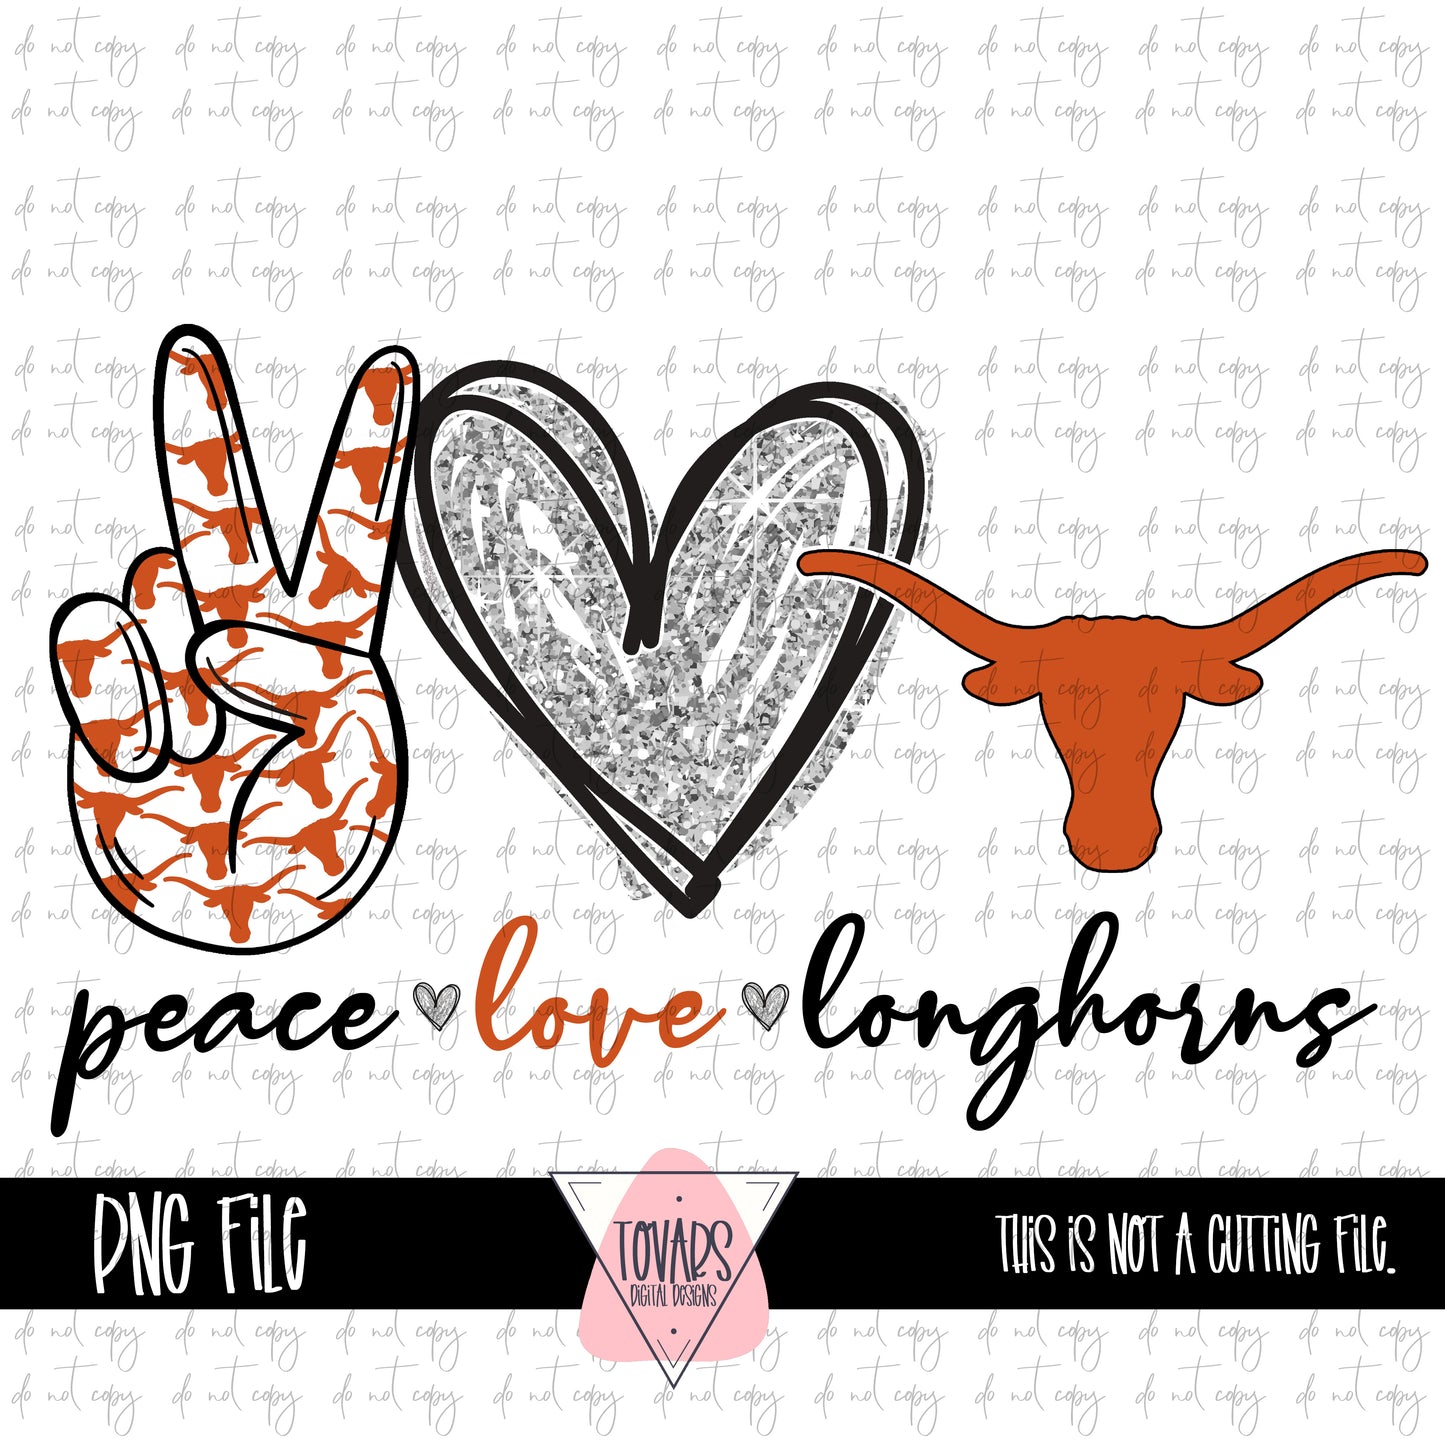 Peace love longhorns png file Orange color, peace love longhorns sports team PNG FILE